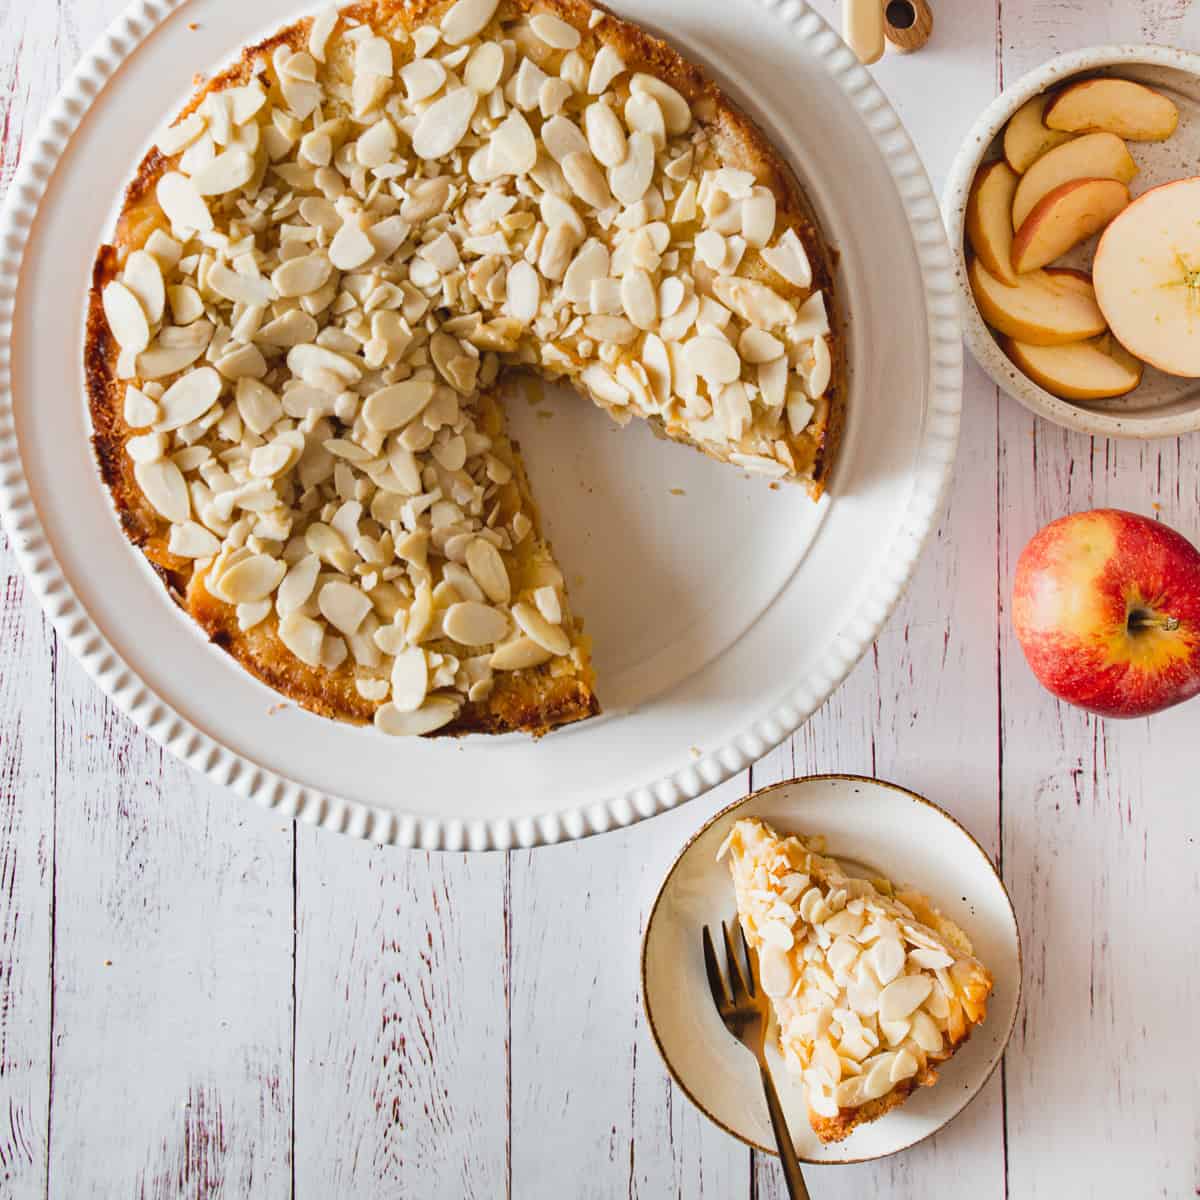 Jewish apple cake recipe: A dairy-free family favorite - The Washington Post